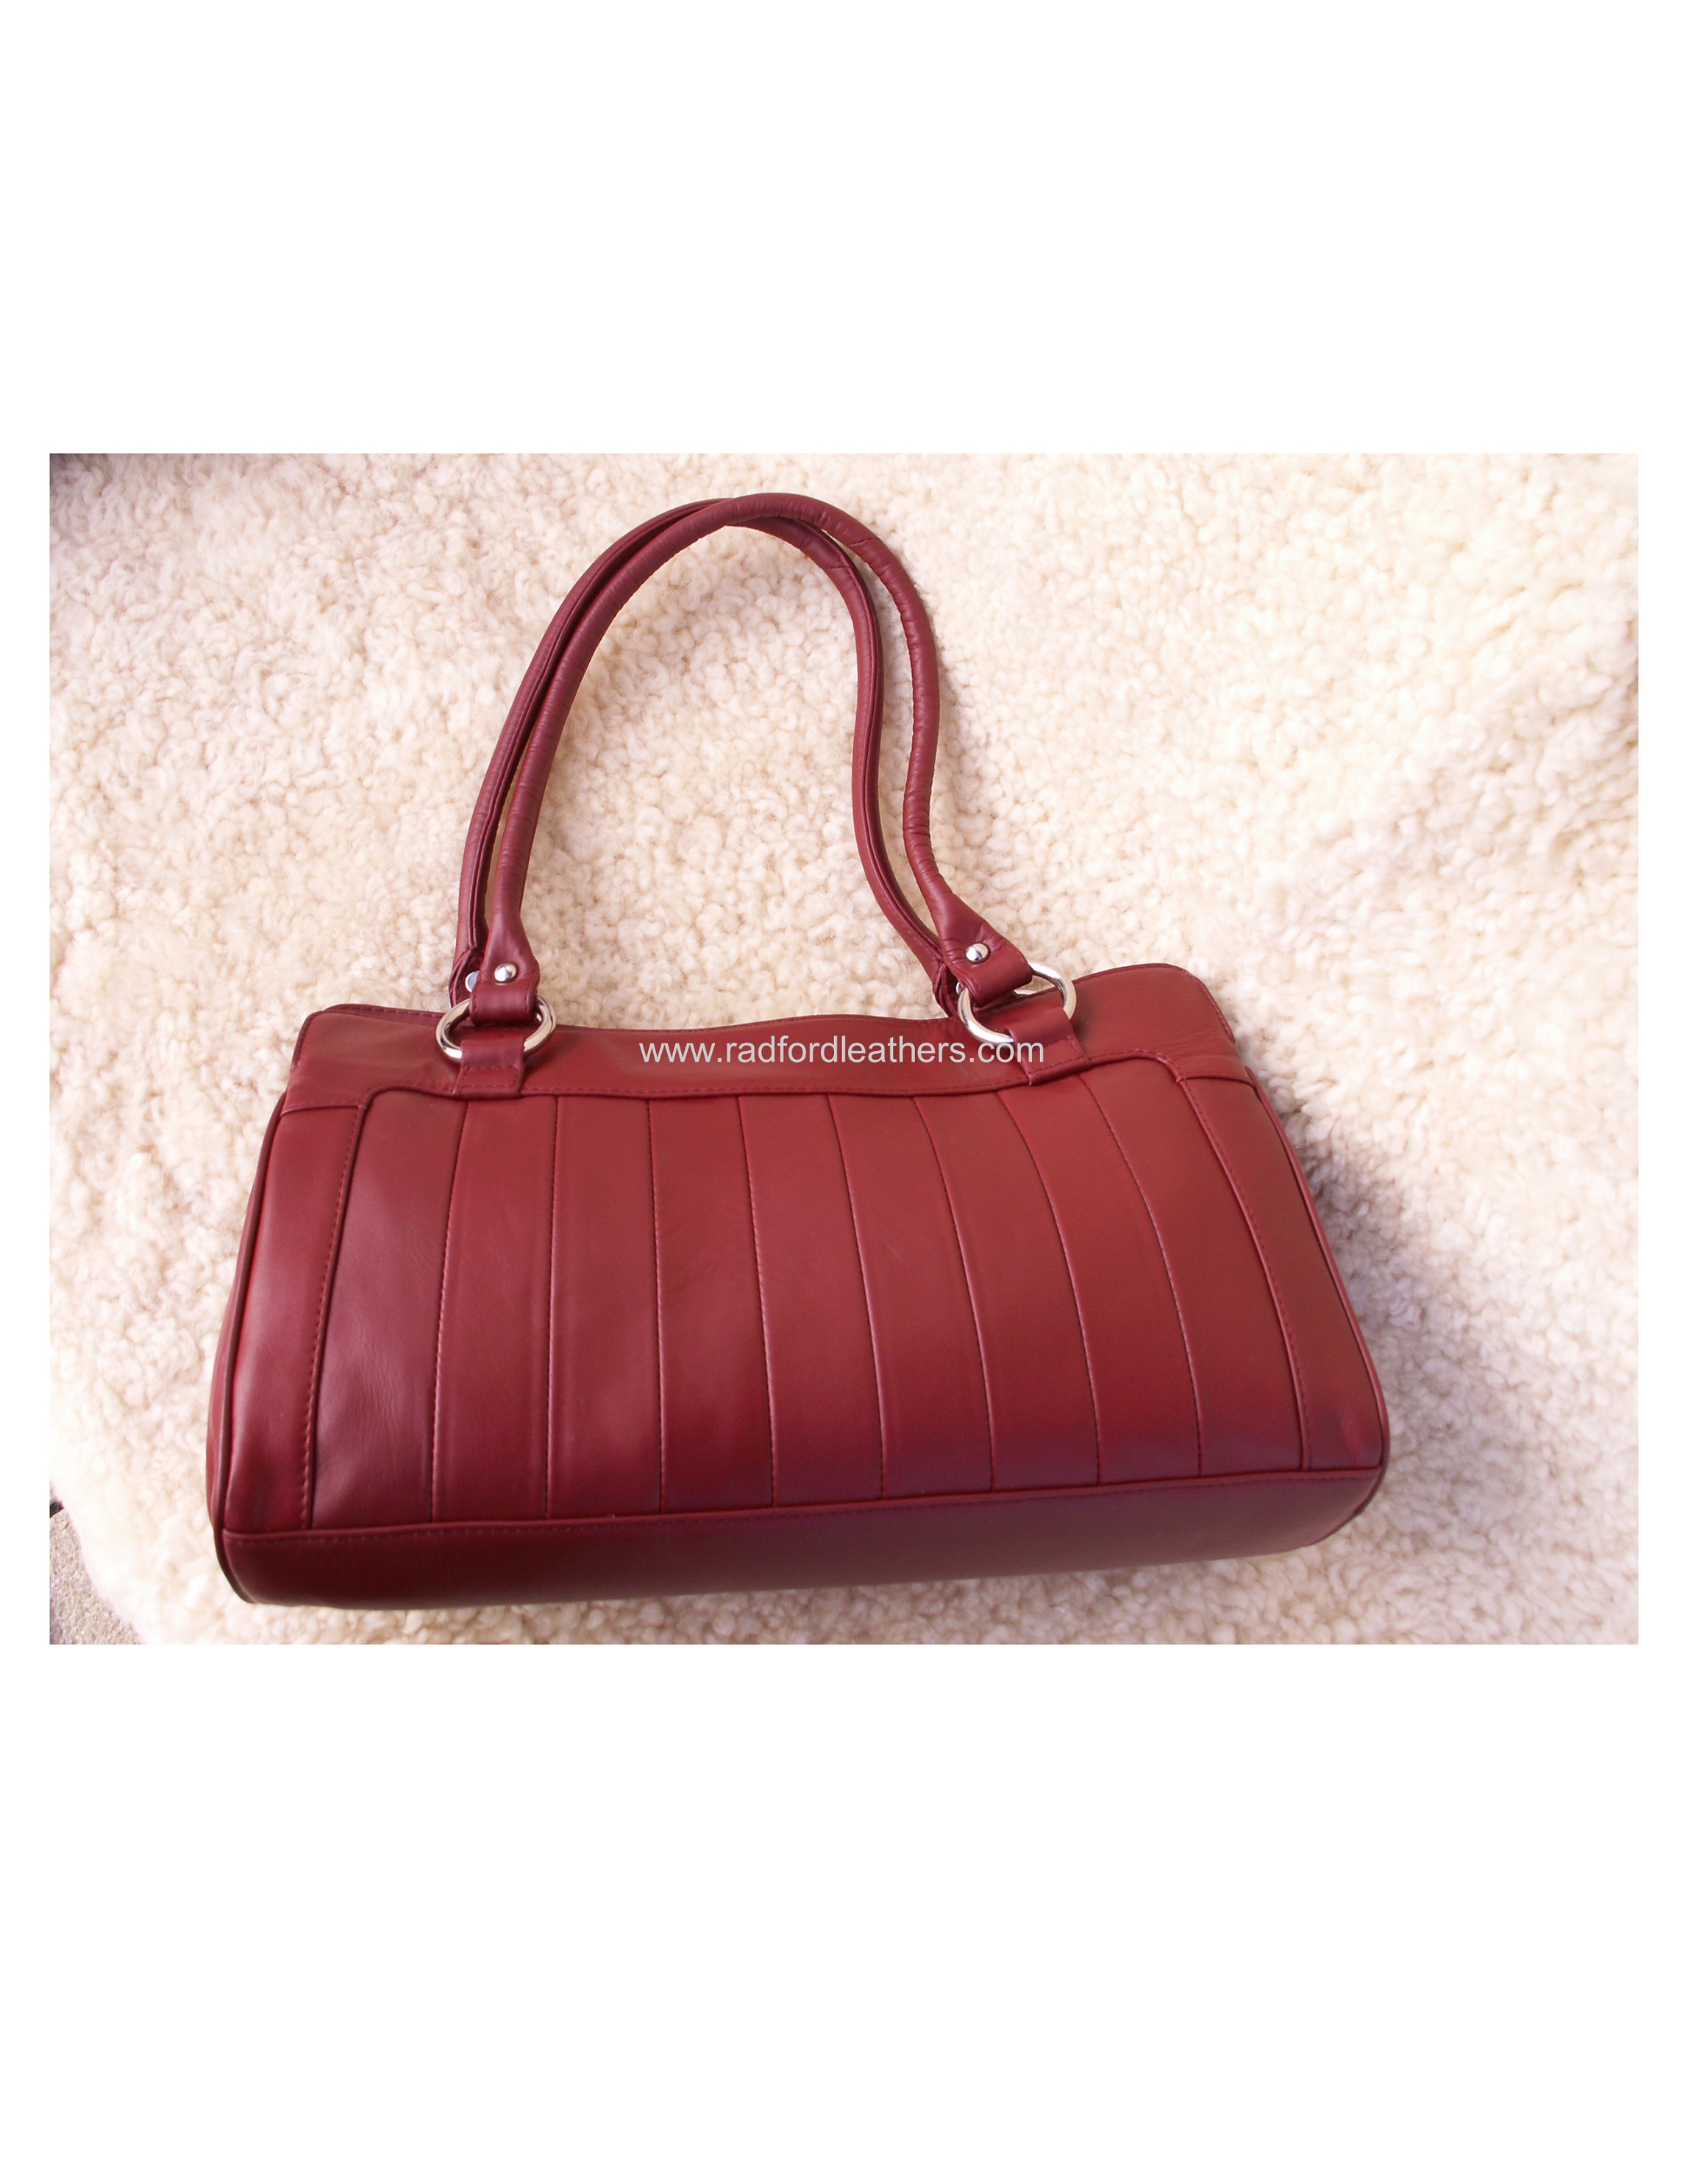 Ladies Leather Handbag - Radford Leather Fashions-Quality Leather and Sheepskin Jackets for Men ...